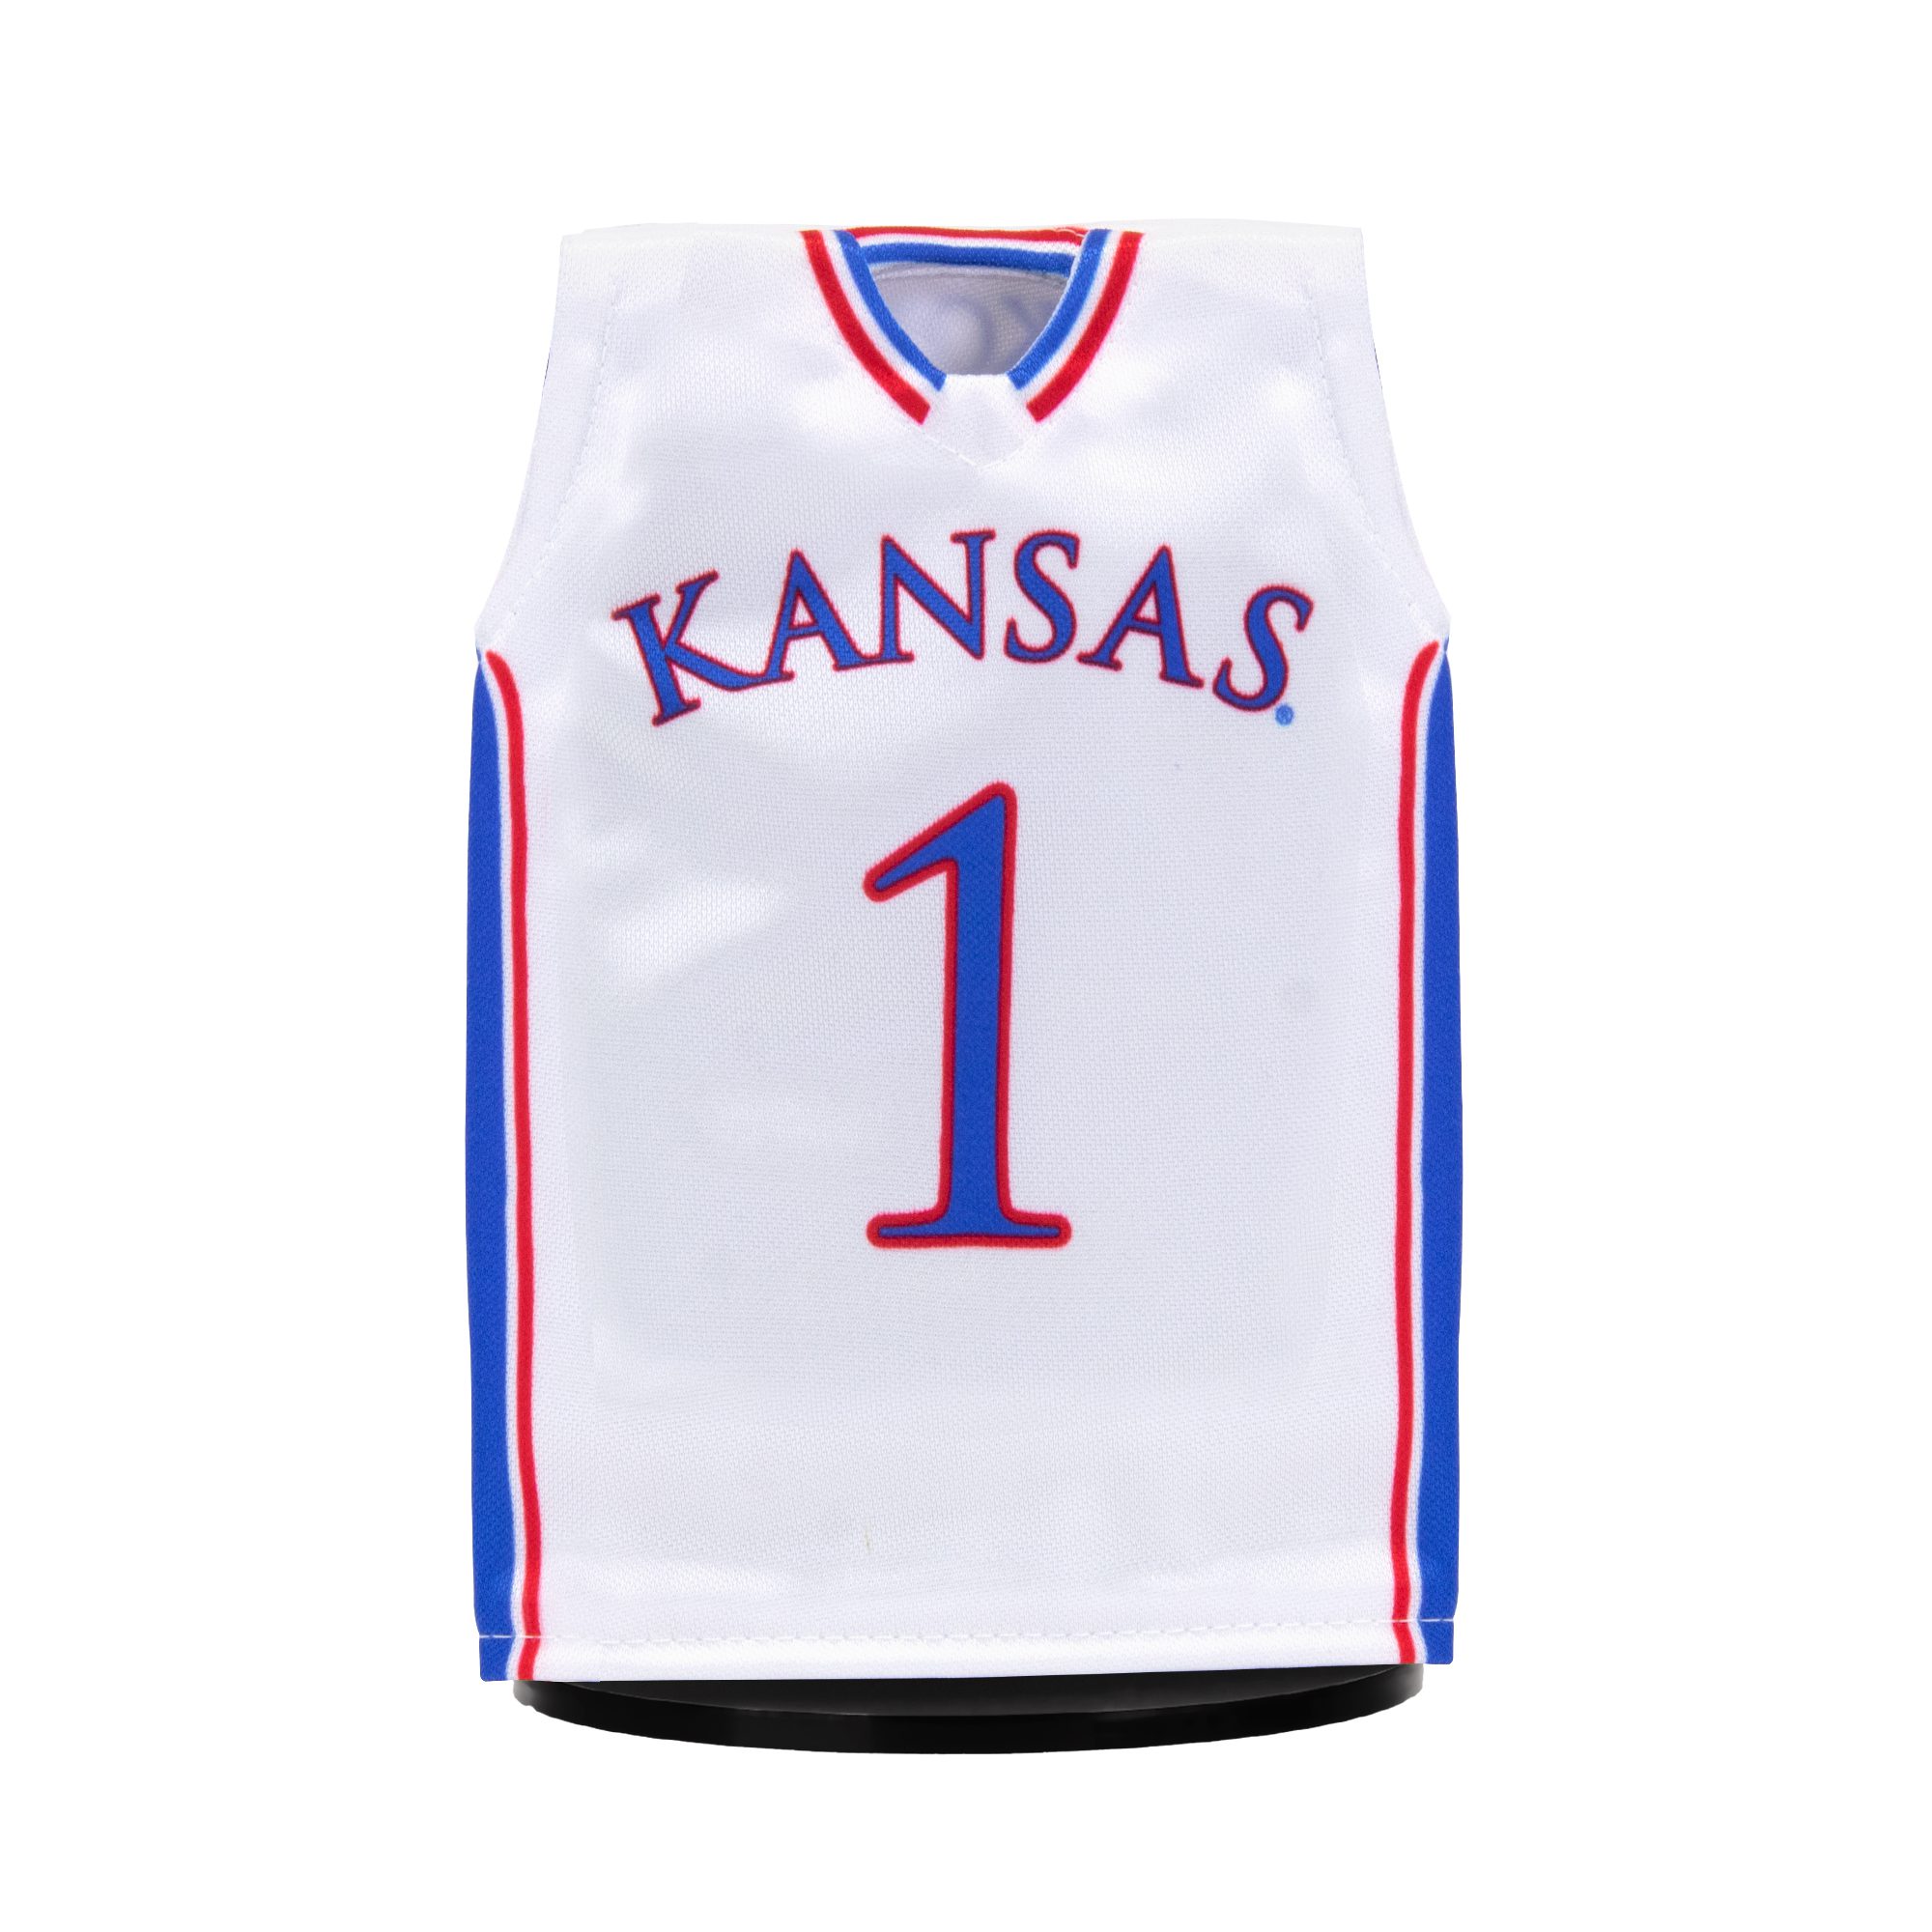 Kansas Basketball #1 MiniJerzey White